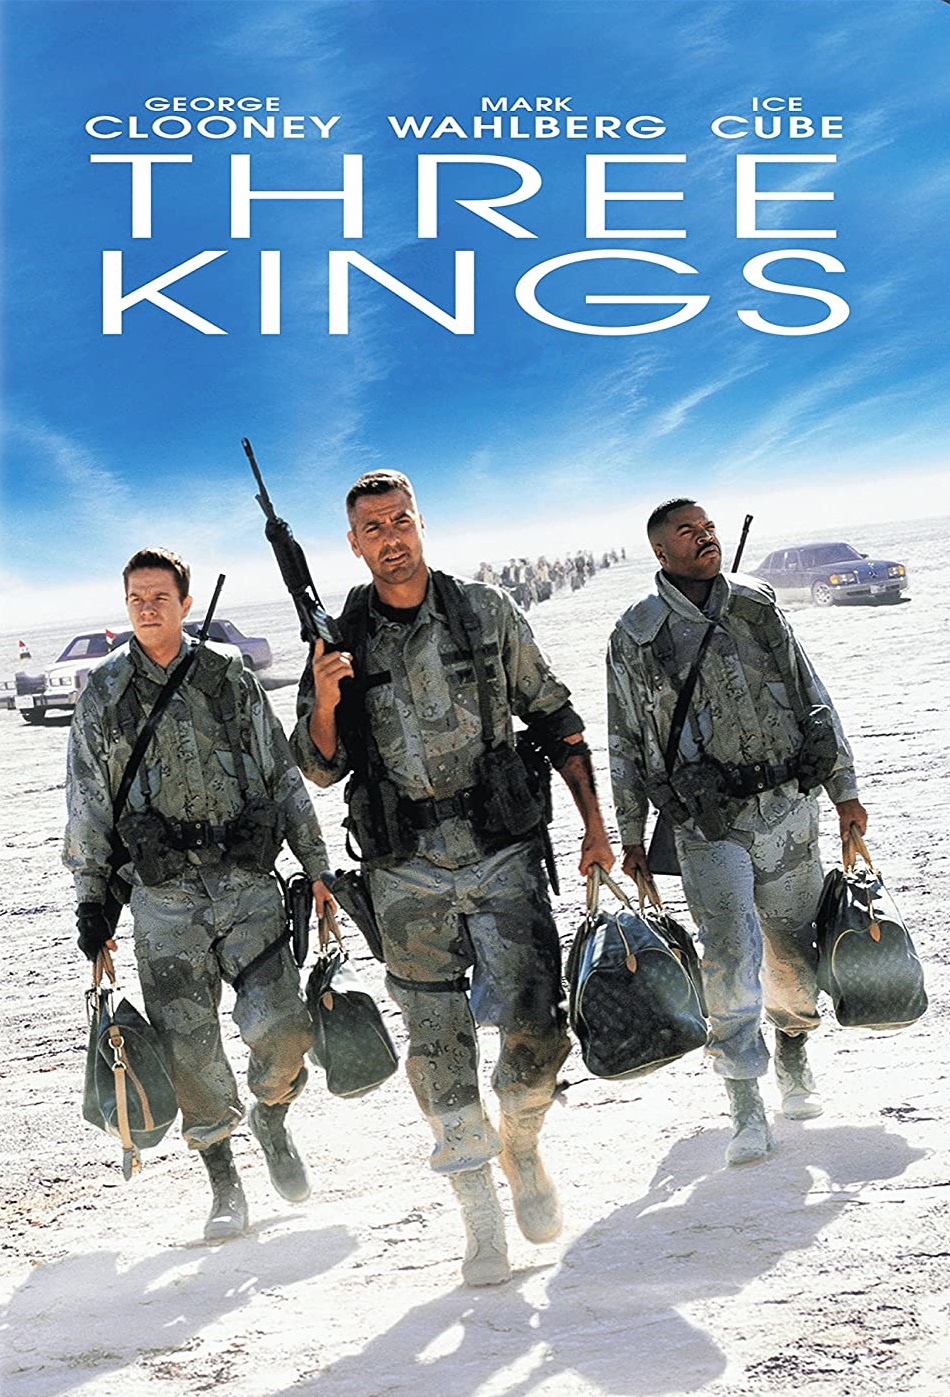 Three Kings [HD] (1999)